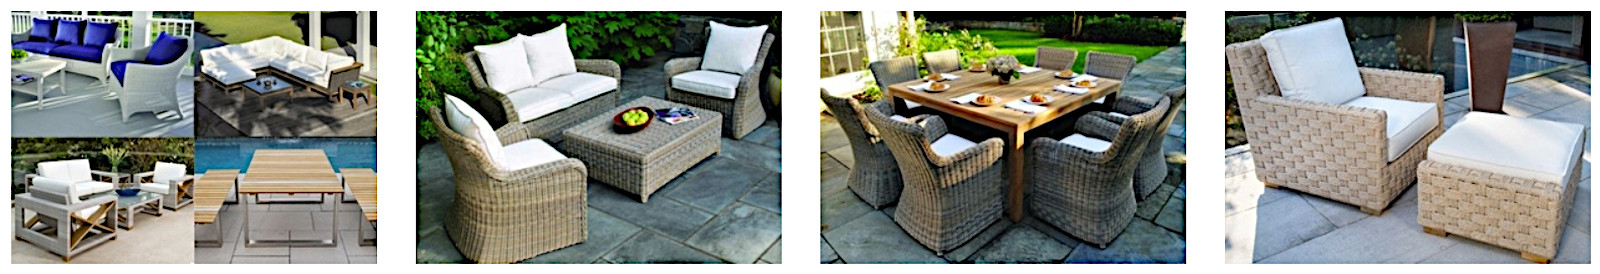 Clearance Price Kingsley Bate teak garden furniture